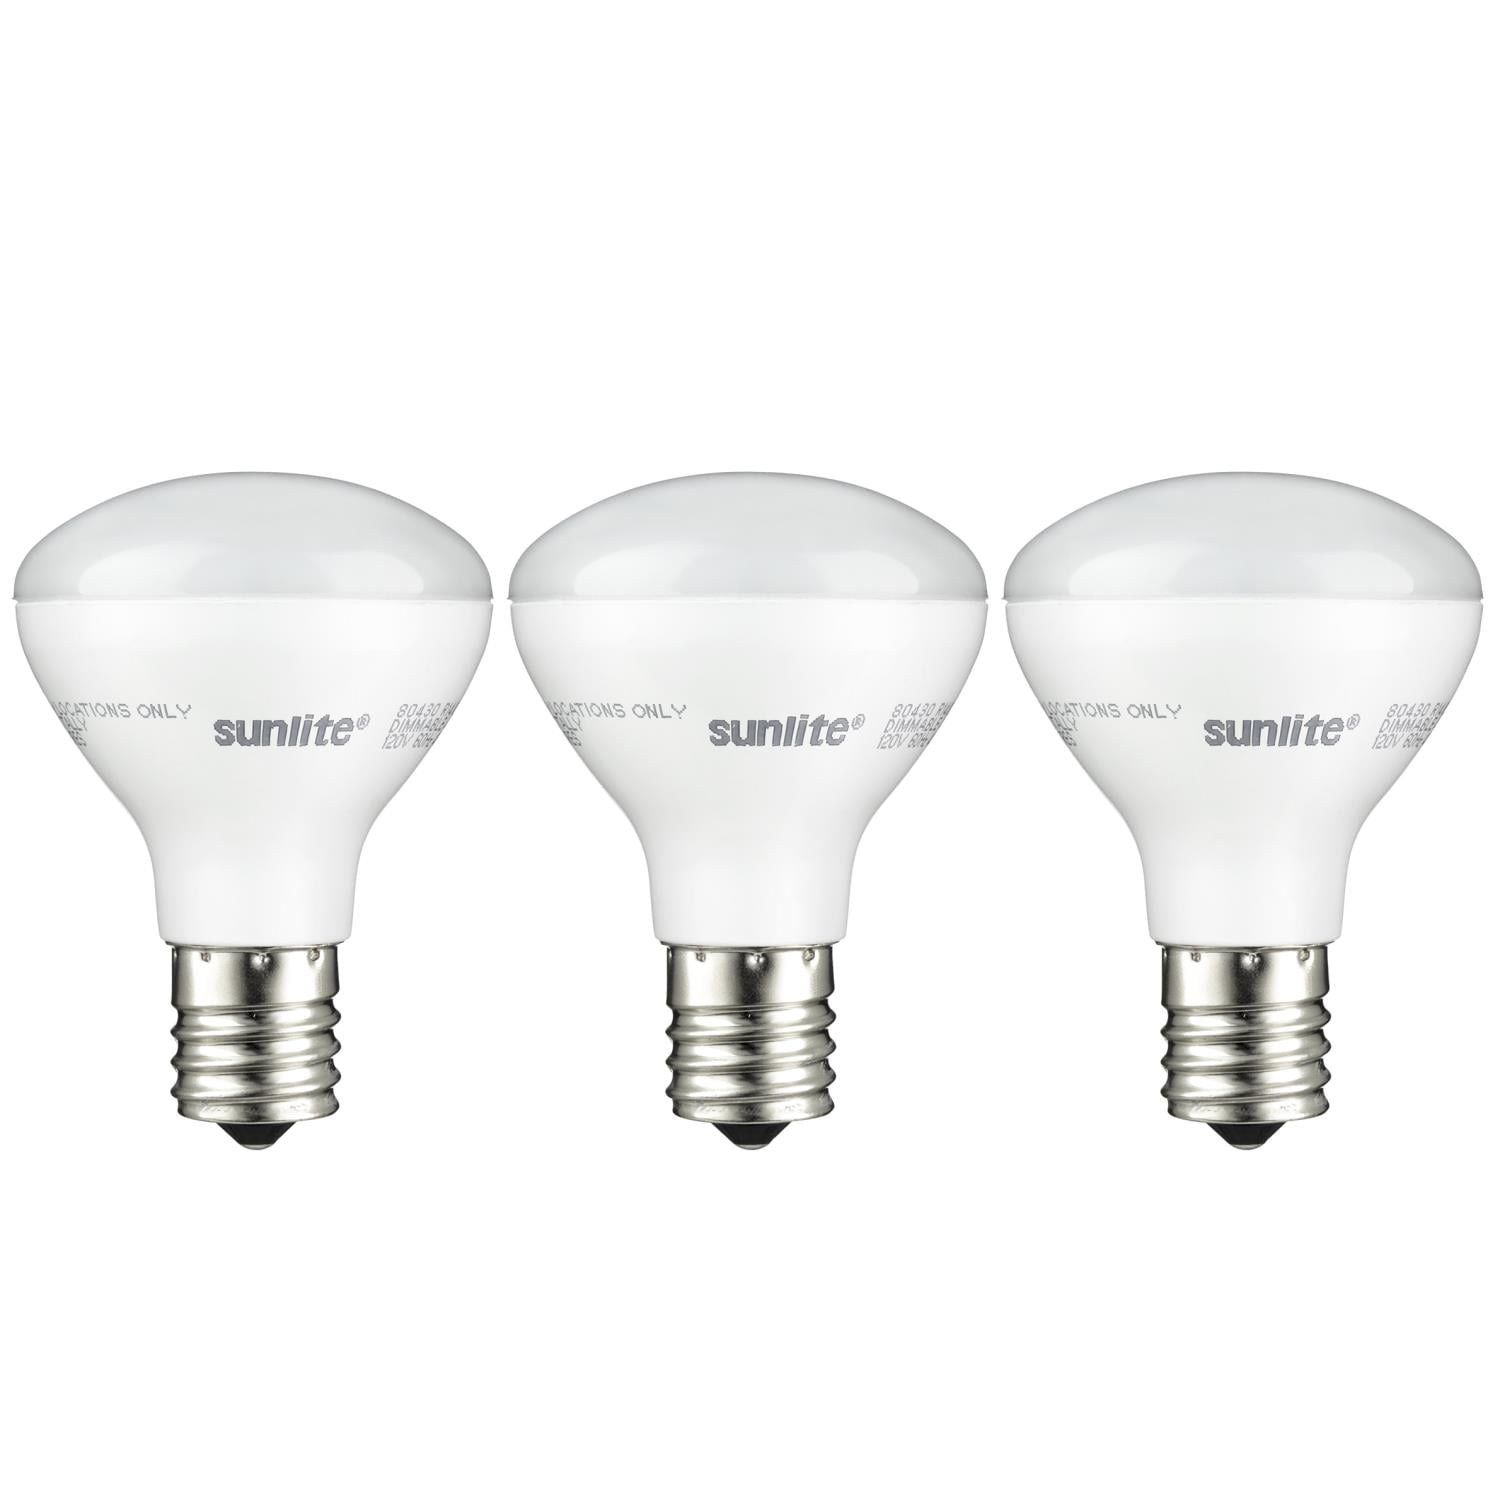 03623 Home Improvement Westinghouse Lighting Corp 25-watt R14 Flood Light Bulb TV Non-Branded Items 